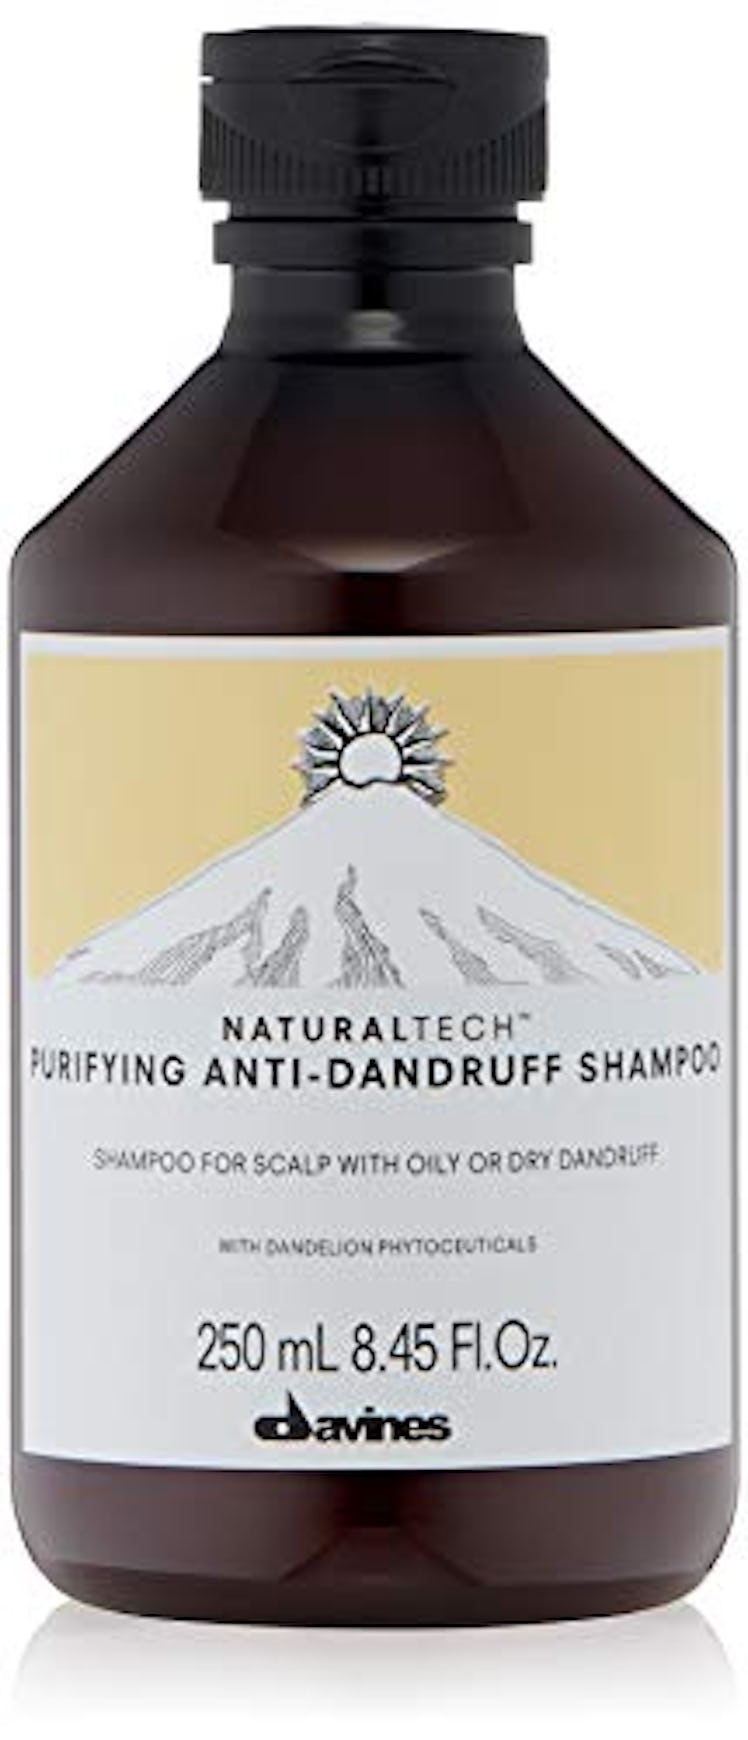 Purifying Anti-Dandruff Shampoo for Men by Davines